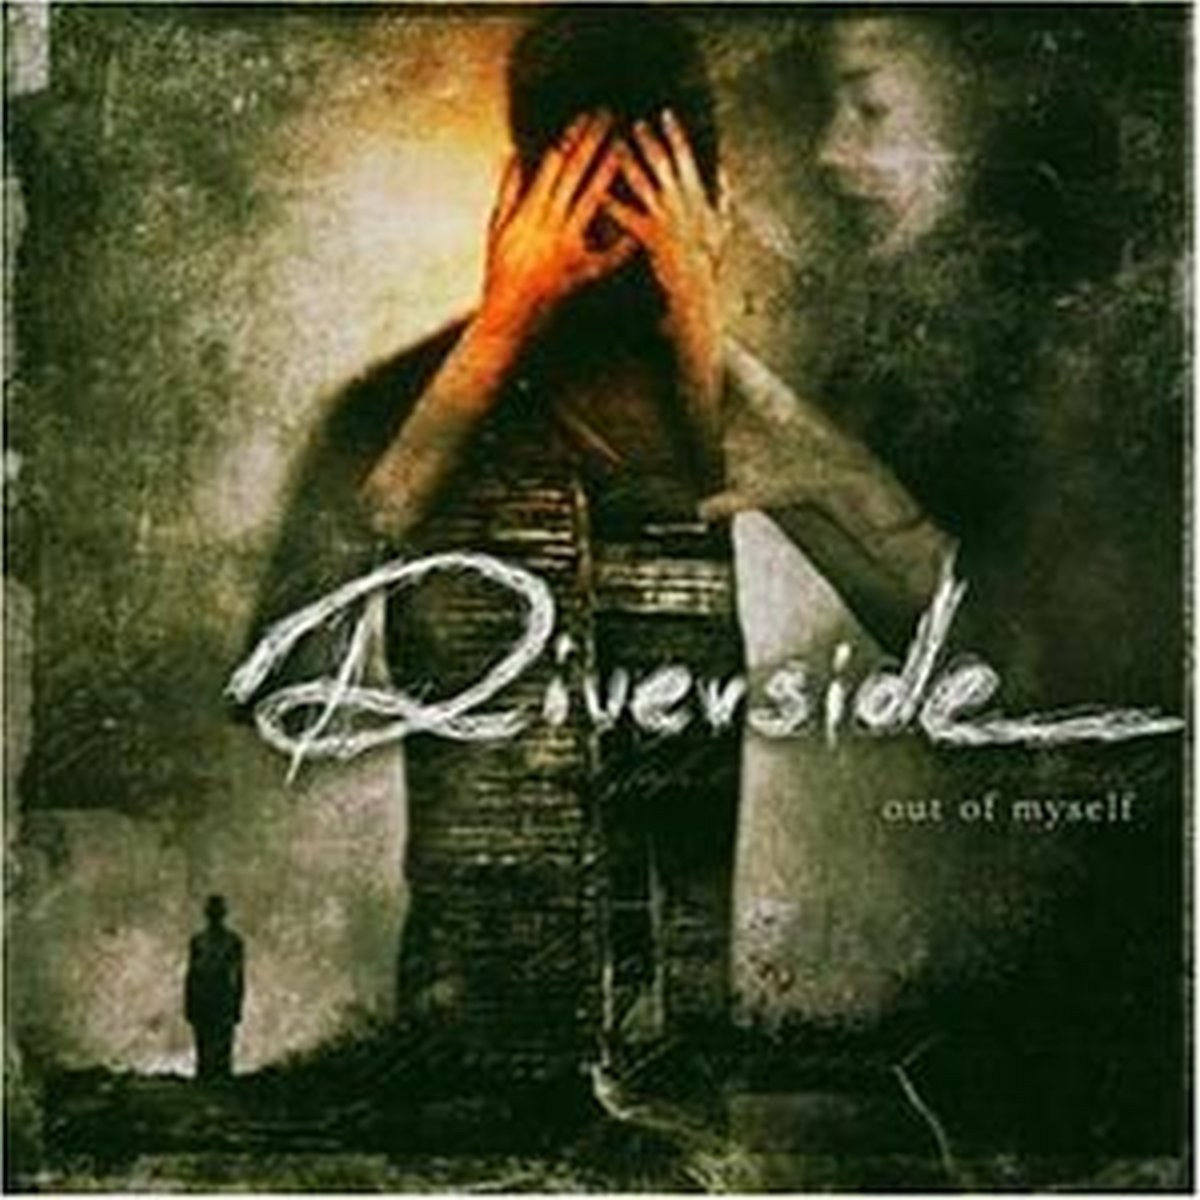 Riverside - Out of Myself, Vinyl